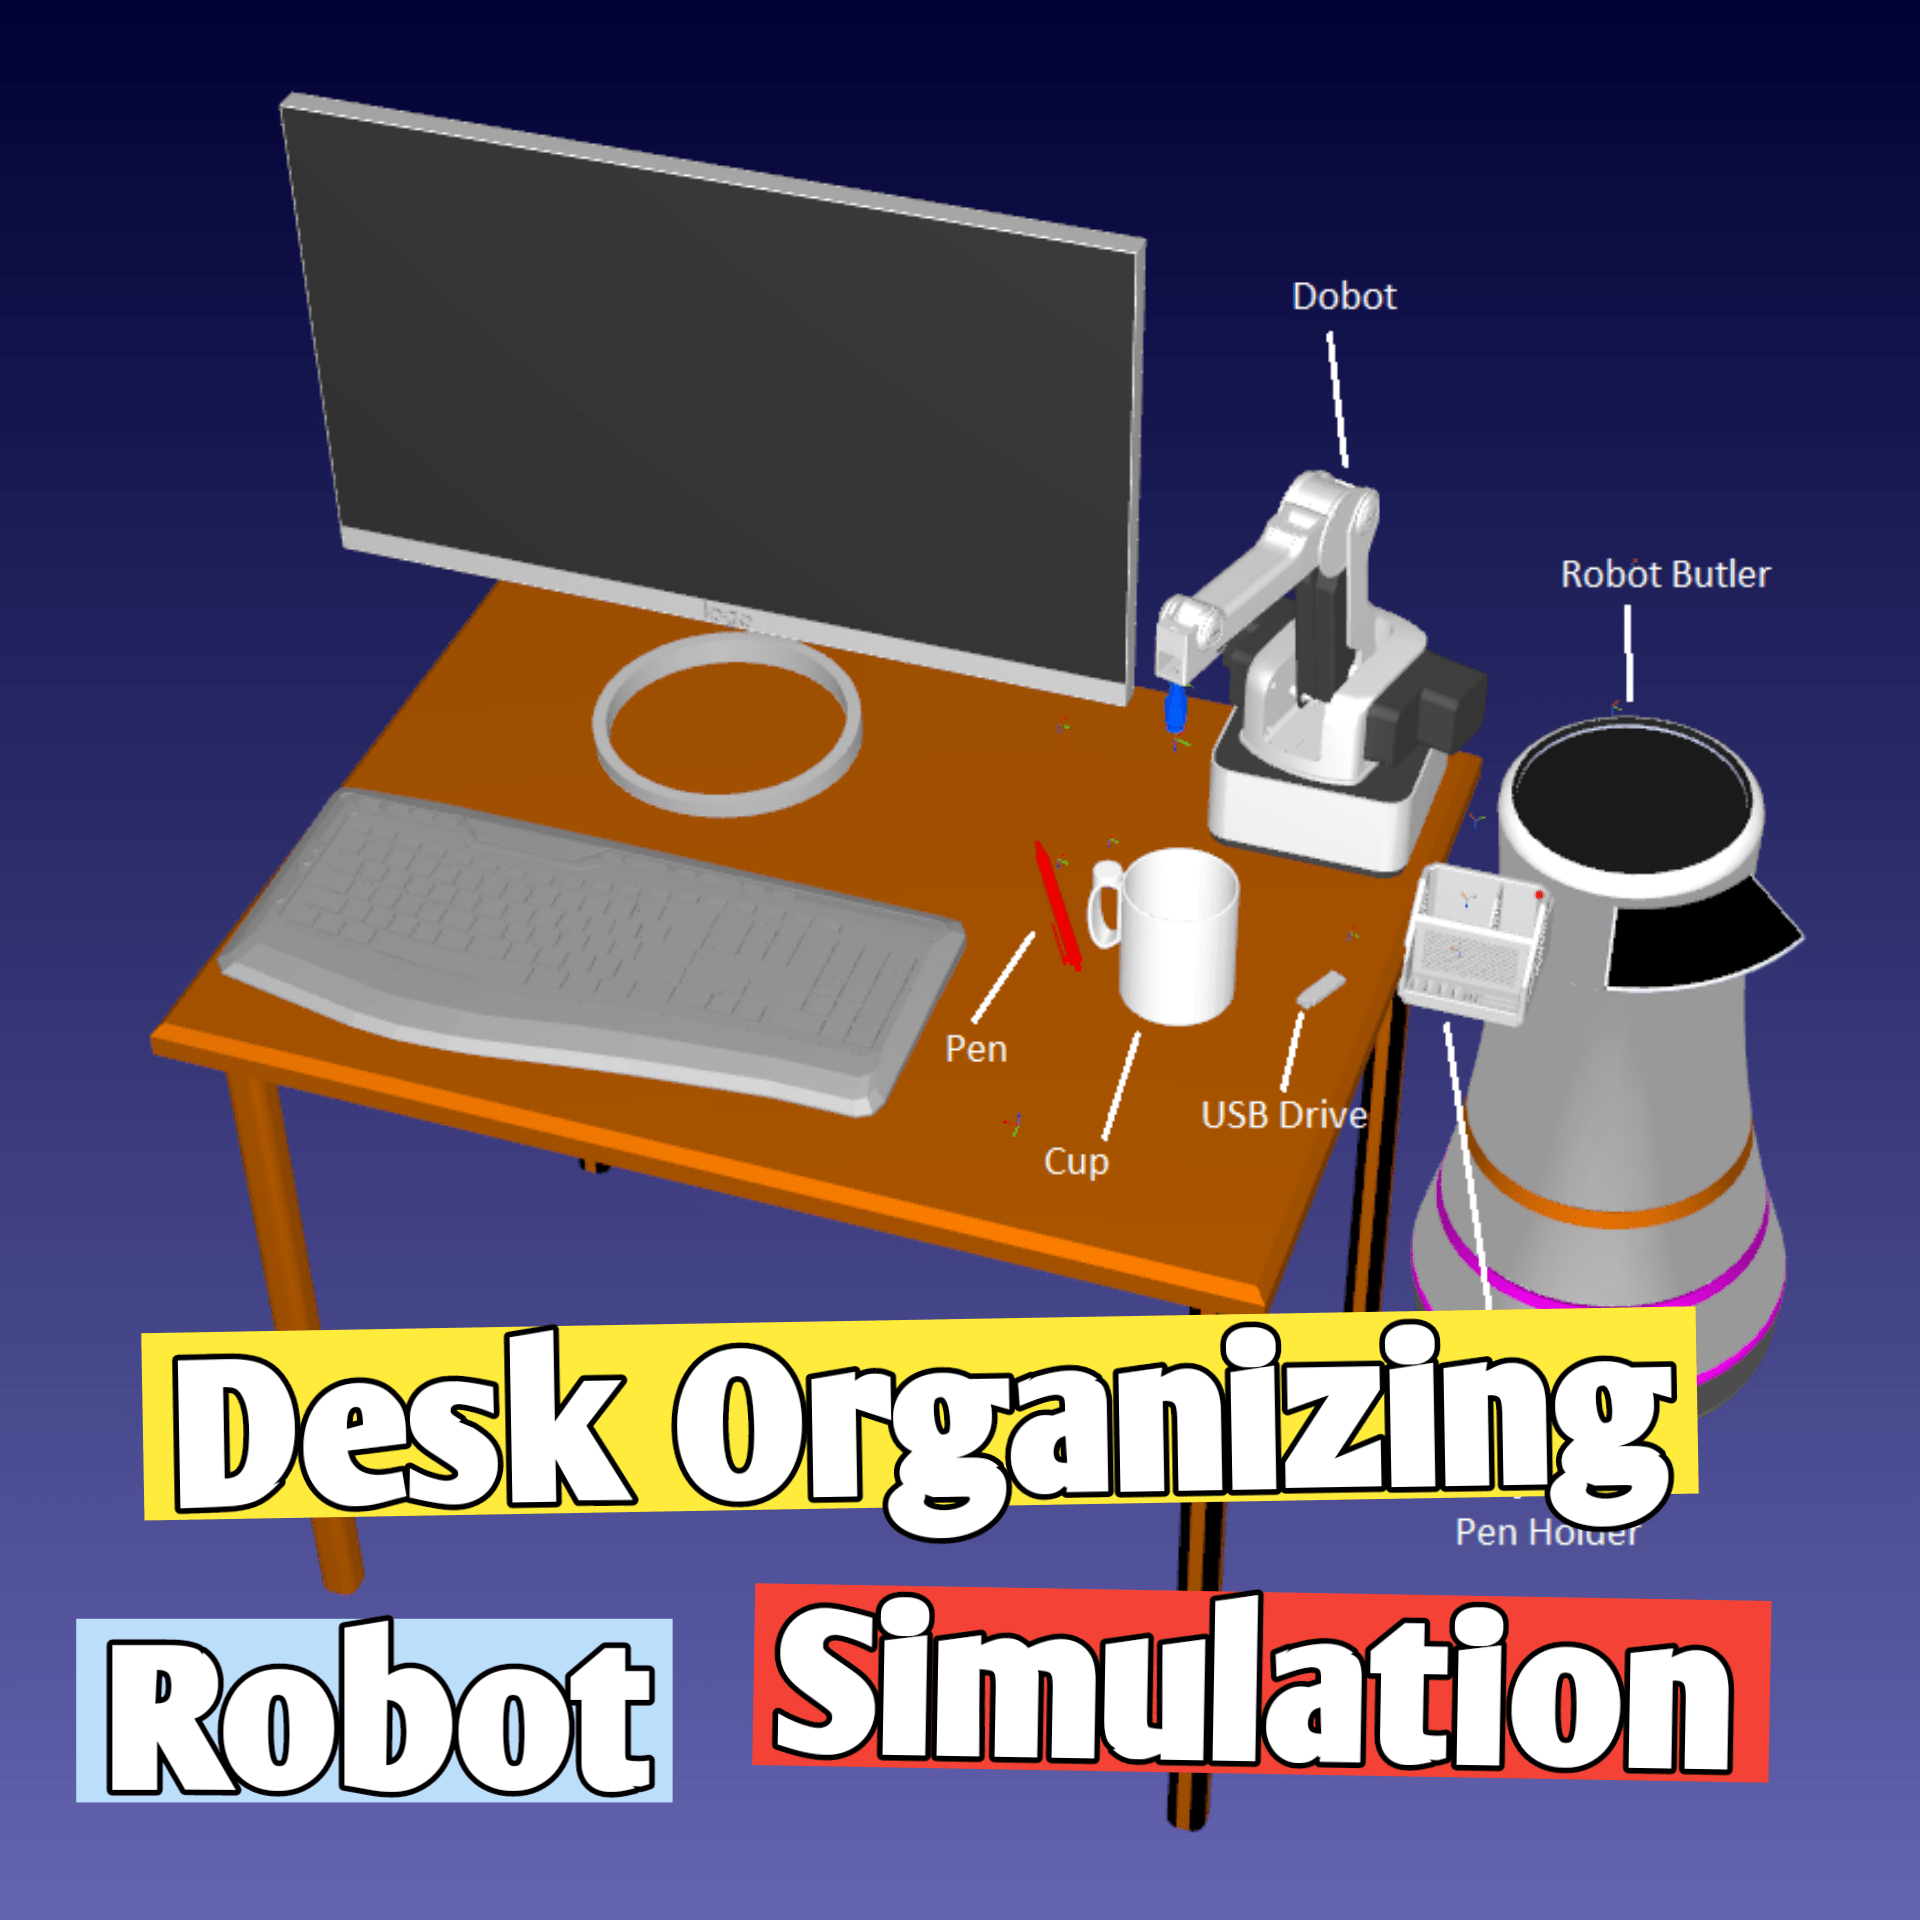 Desk Organizing Robot Simulation